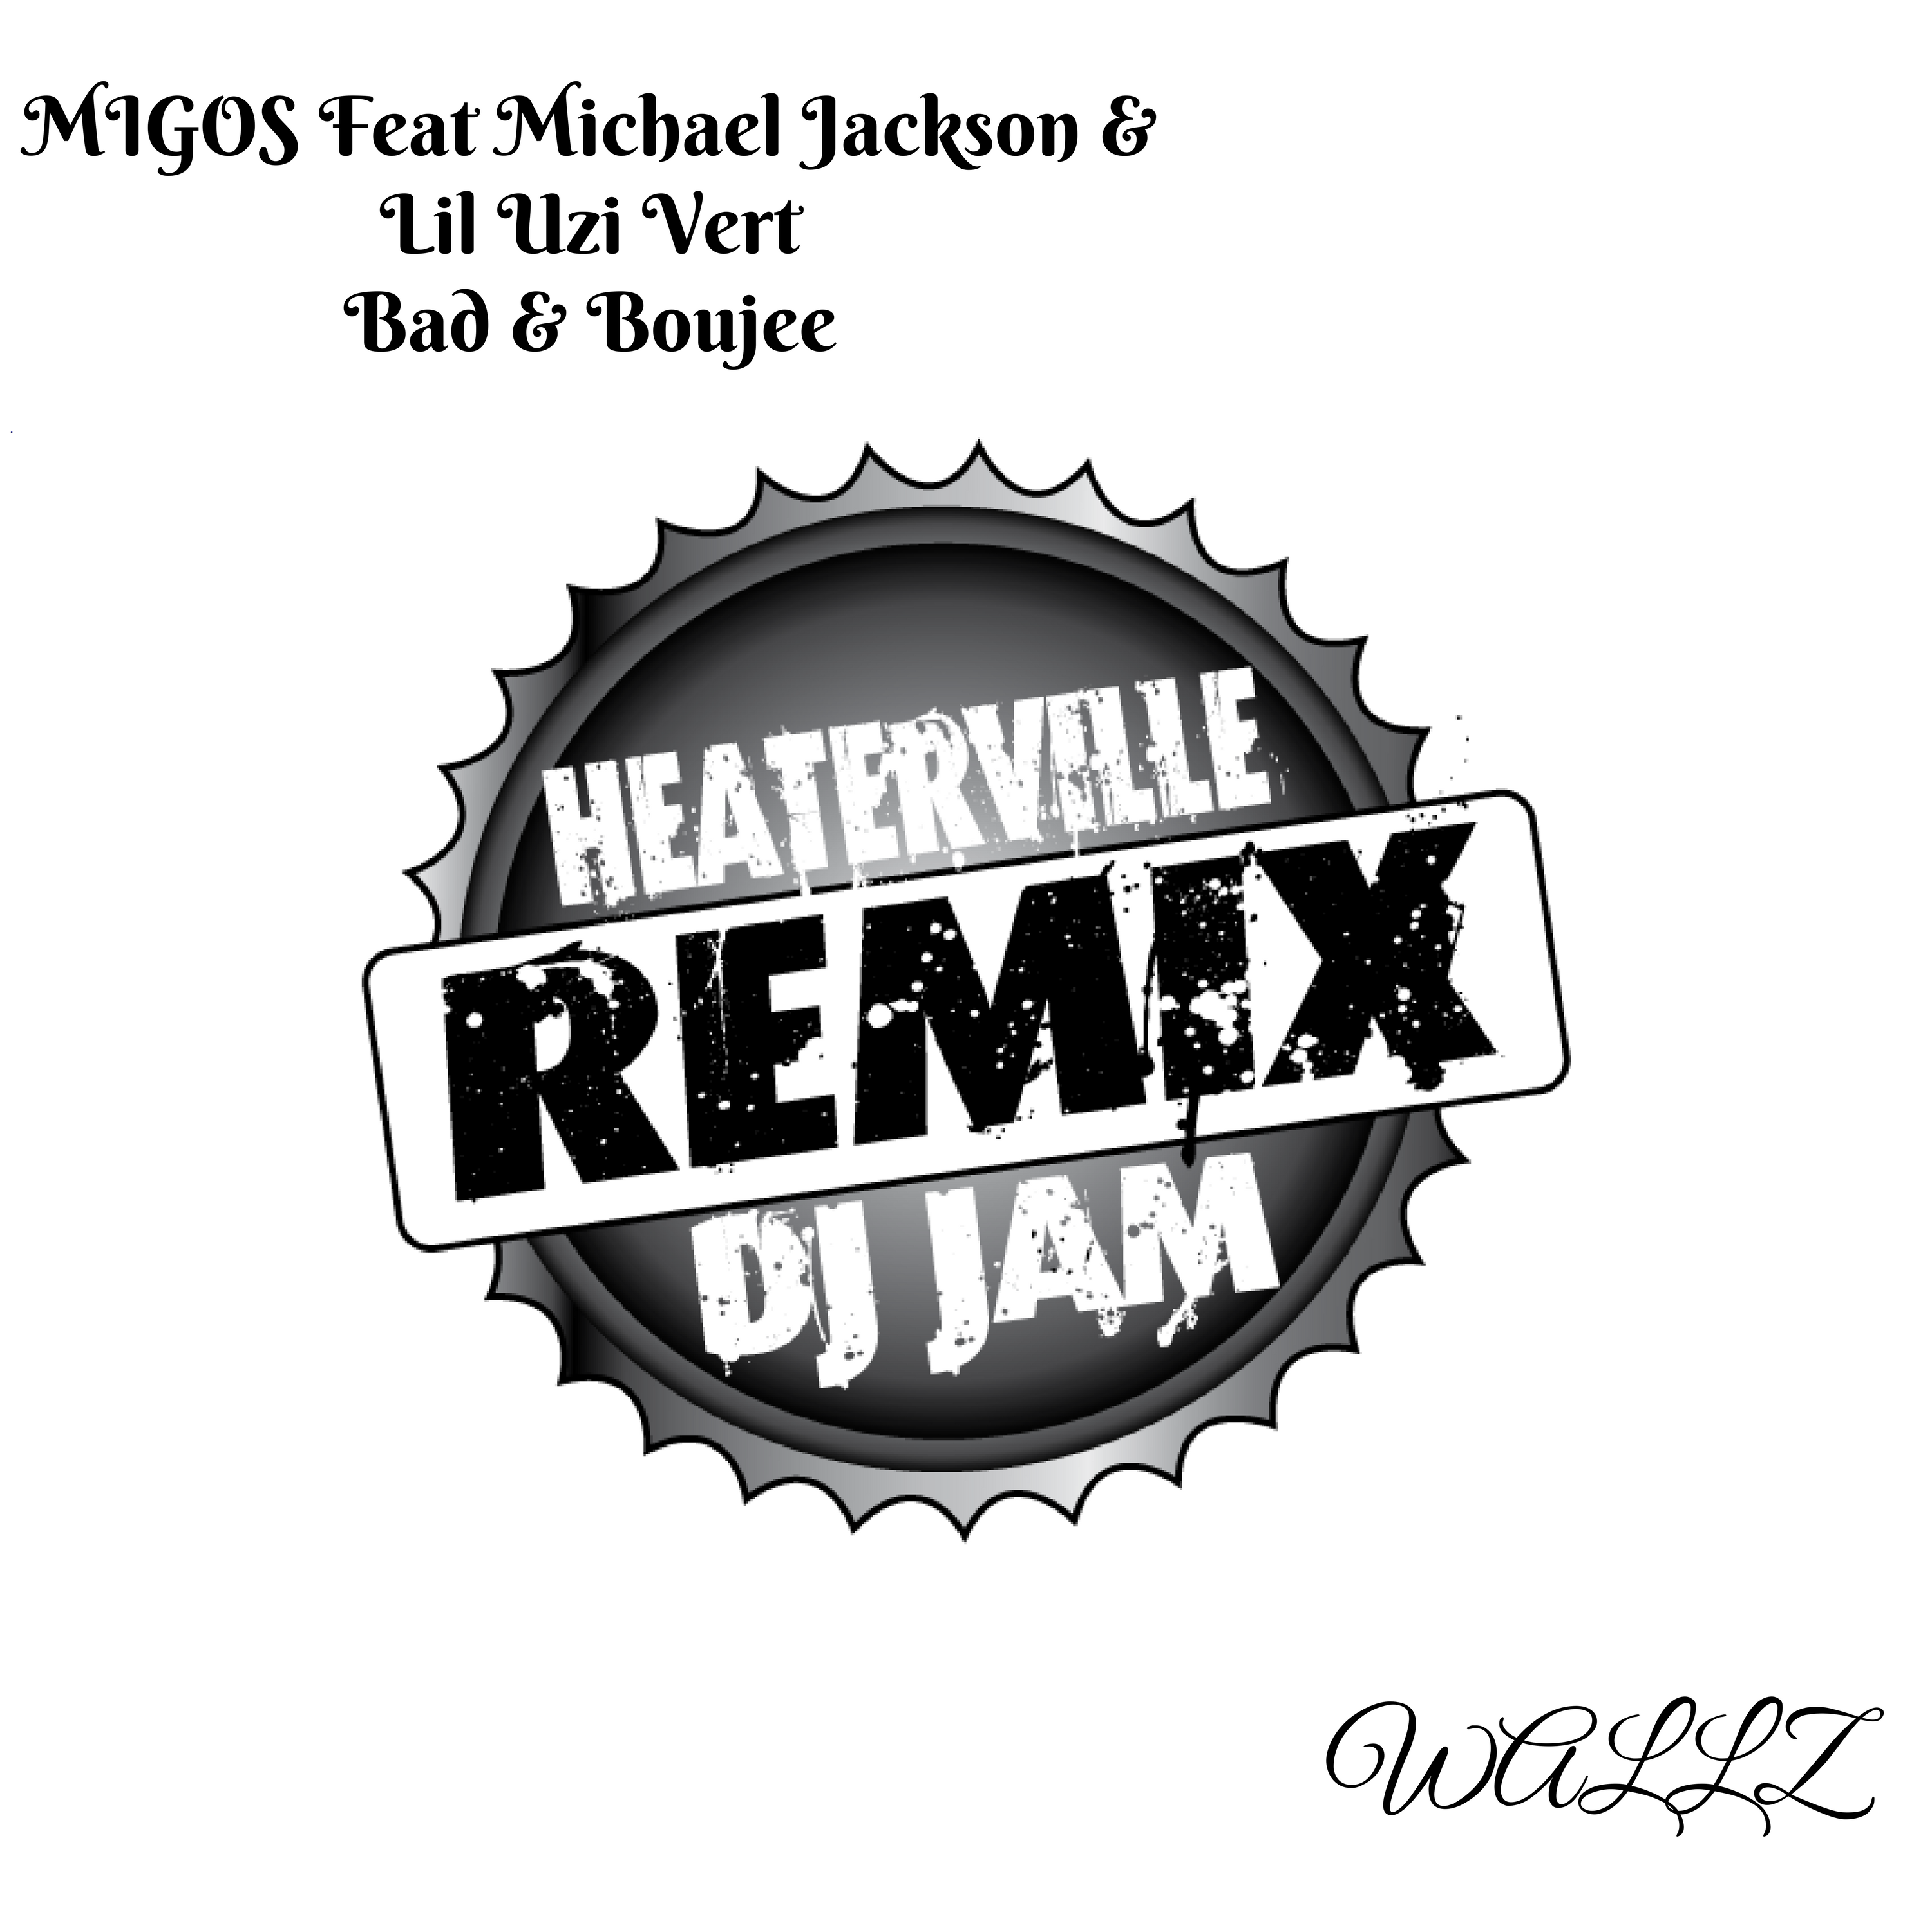 Migos “Bad & Boujee” featuring Michael Jackson & Lil Uzi Vert